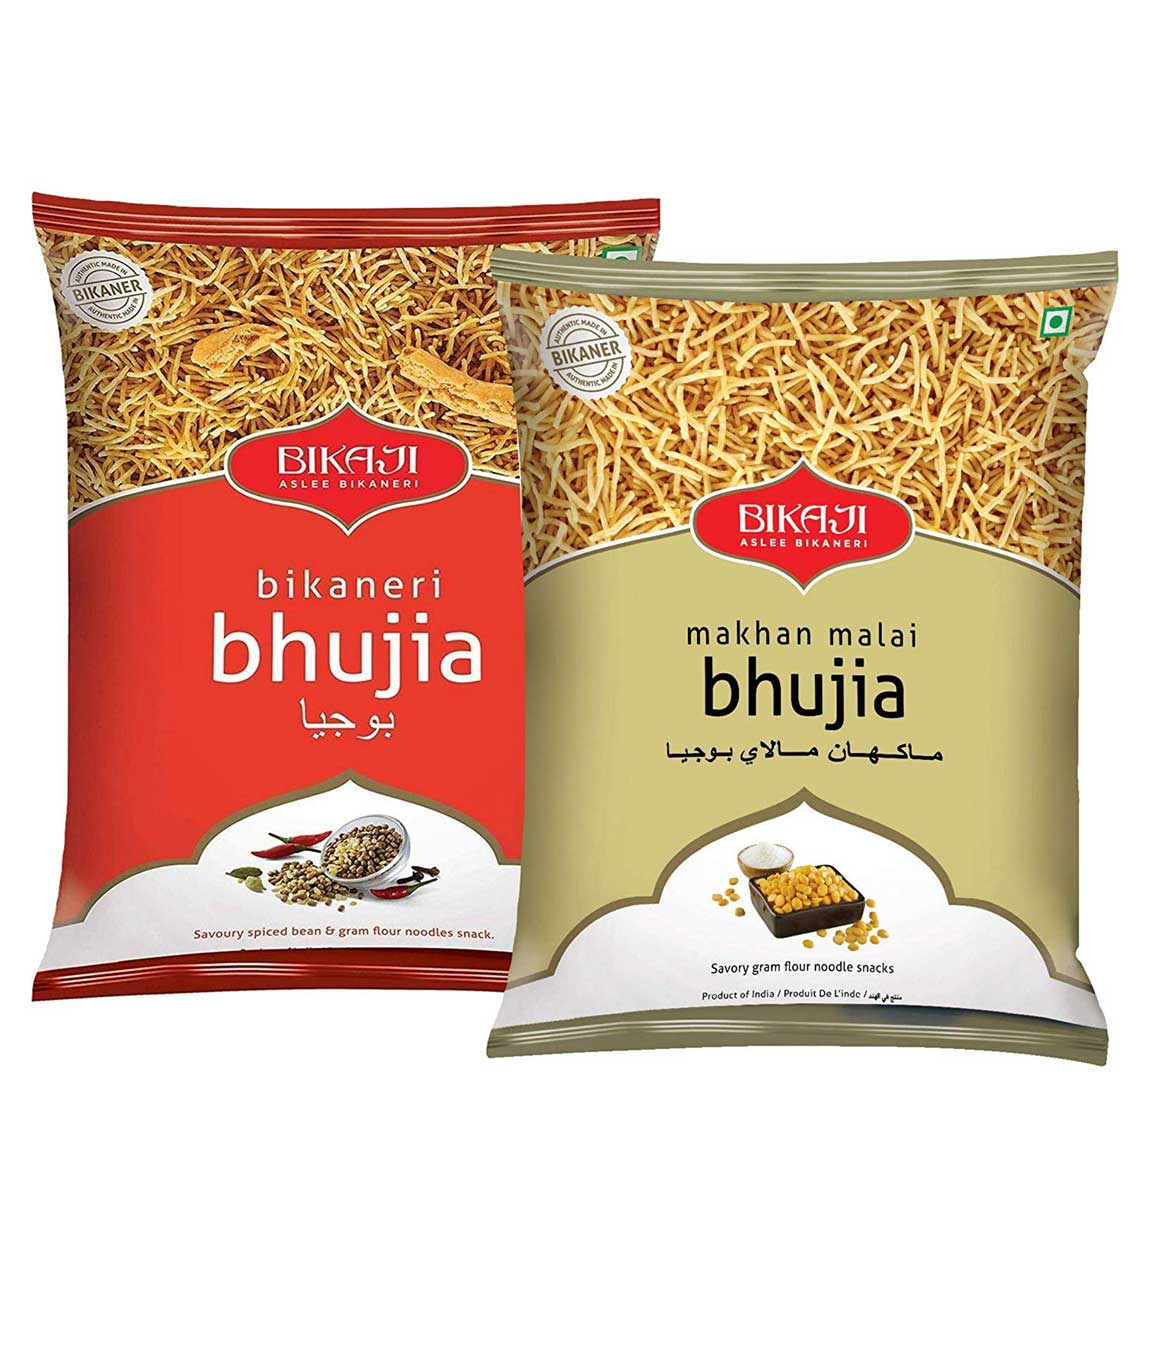 Bikaji Combo Pack - Bikaneri Bhujia 400gm - Makhan Malai Bhujia 400gm - Indian Namkeen Snacks (Pack of 2)